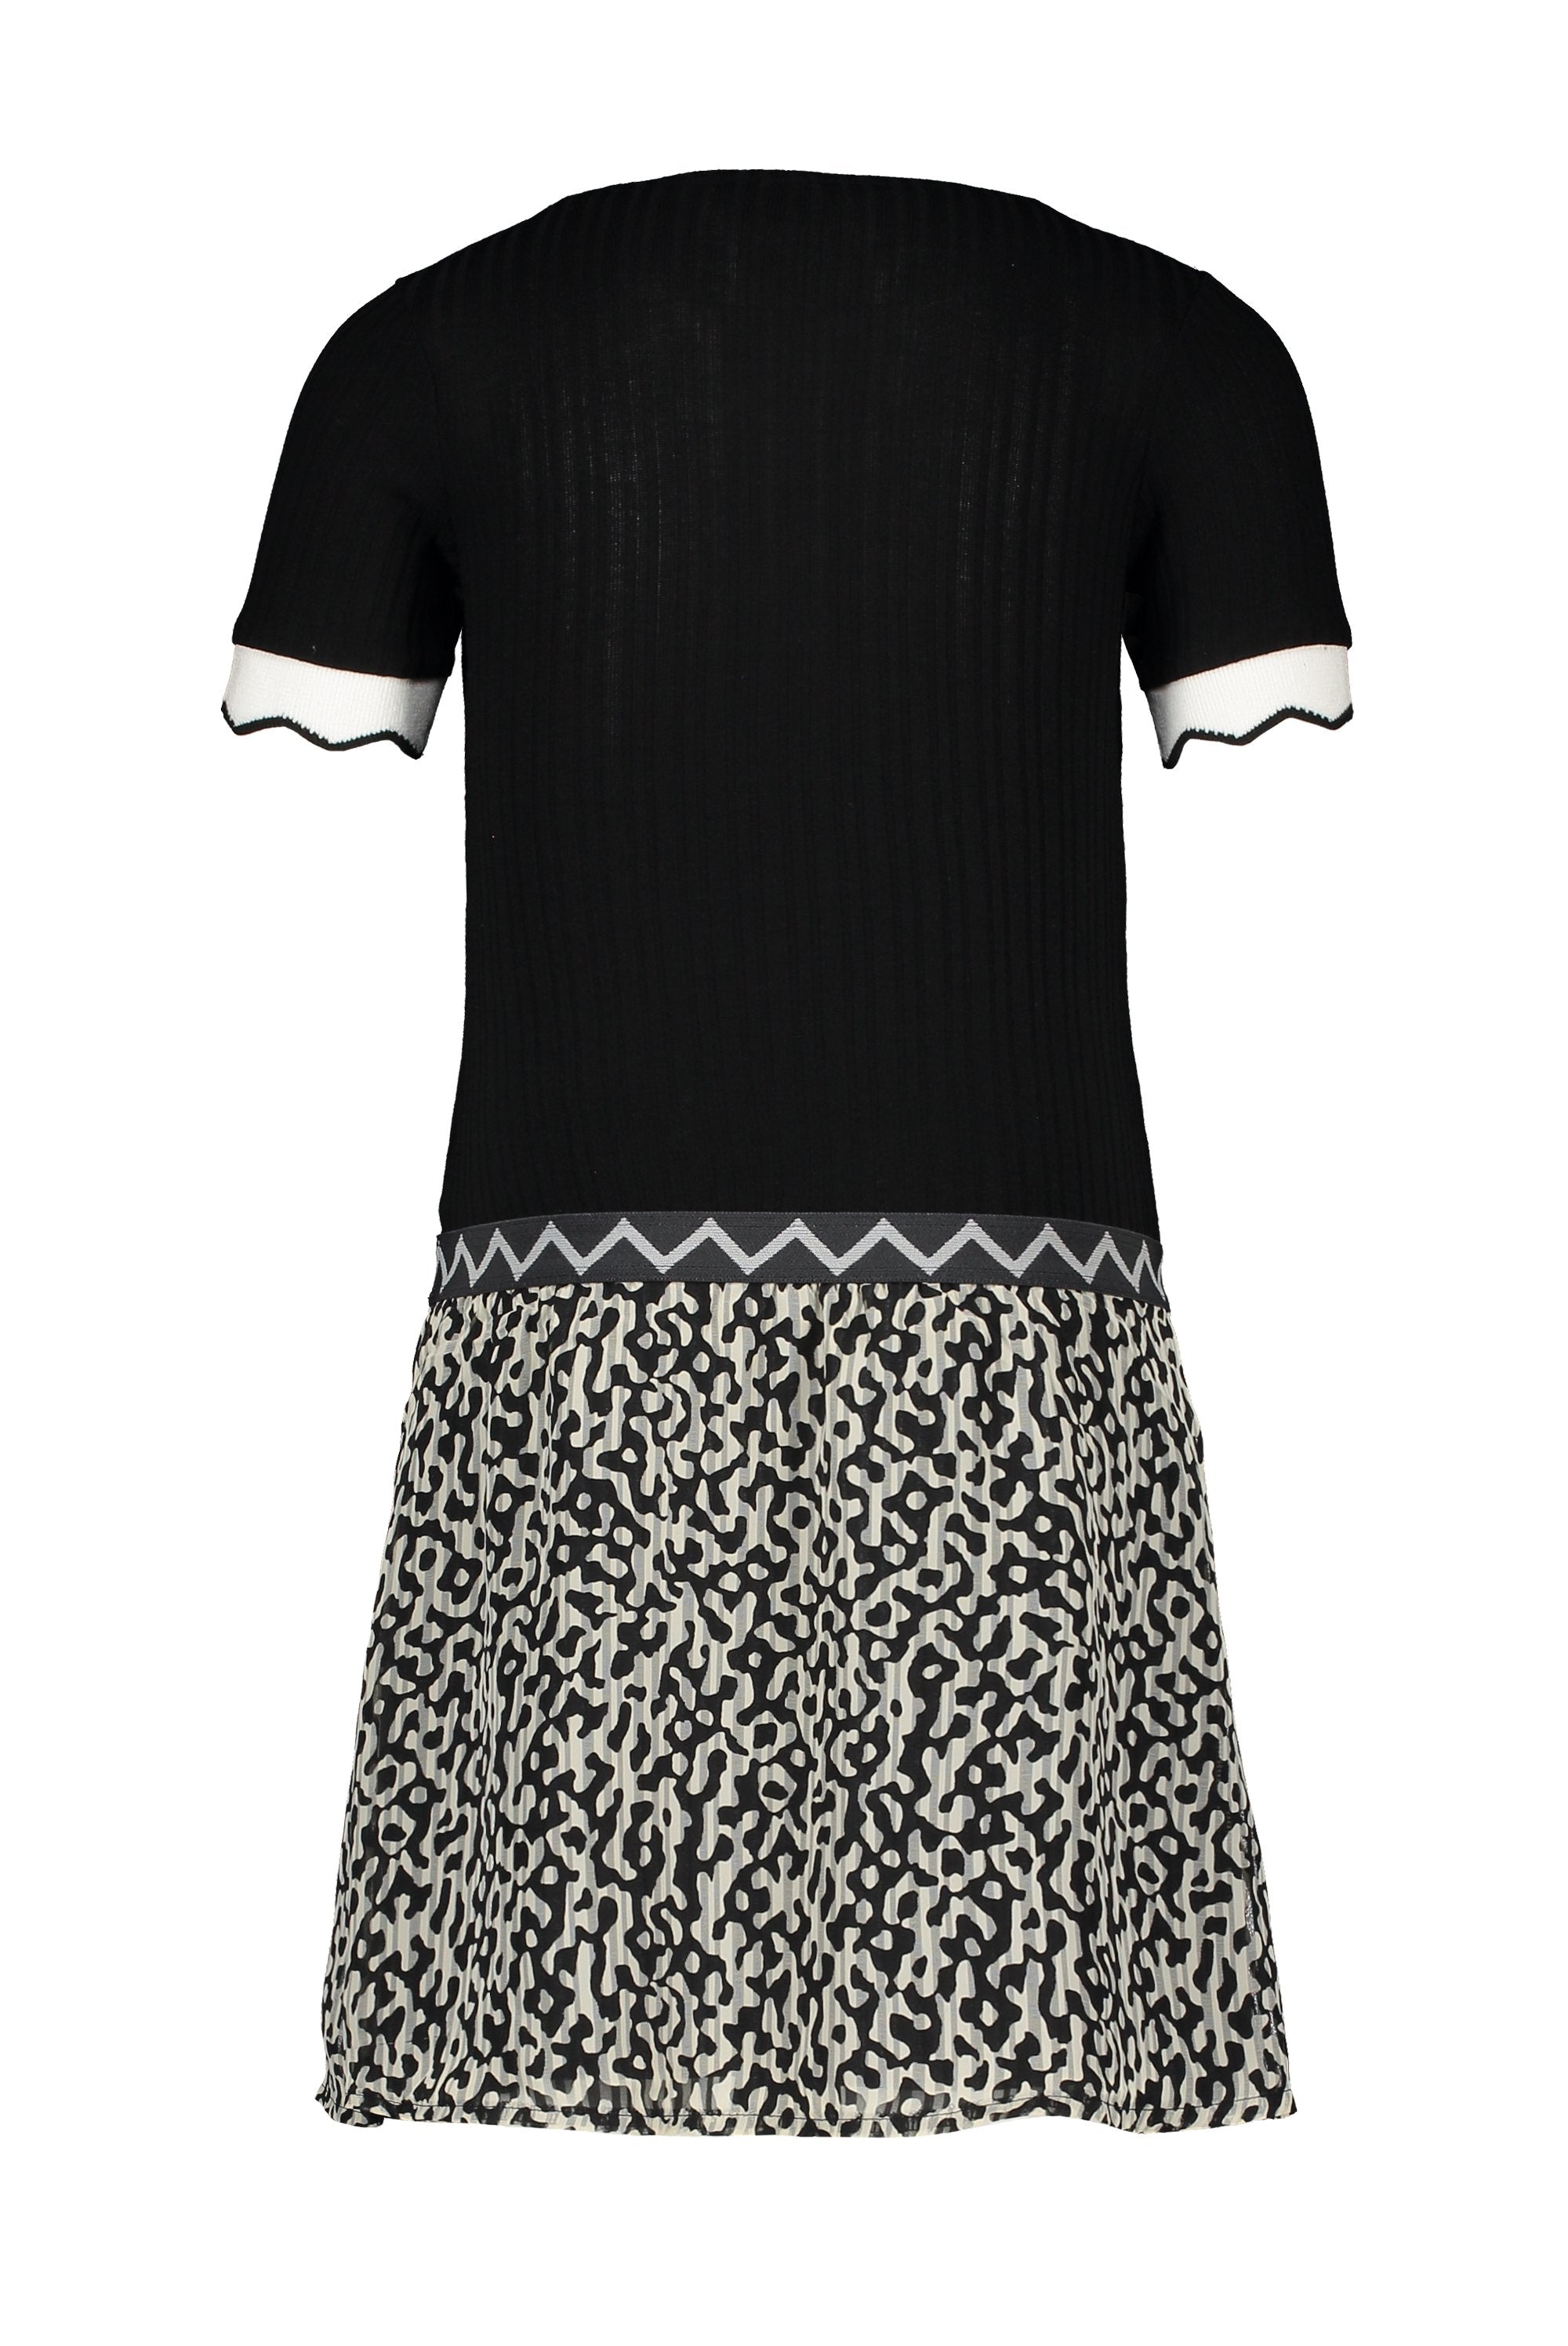 Meisjes Flo girls ss rib dress with fancy plisse skirt van Flo in de kleur Graphic in maat 128.